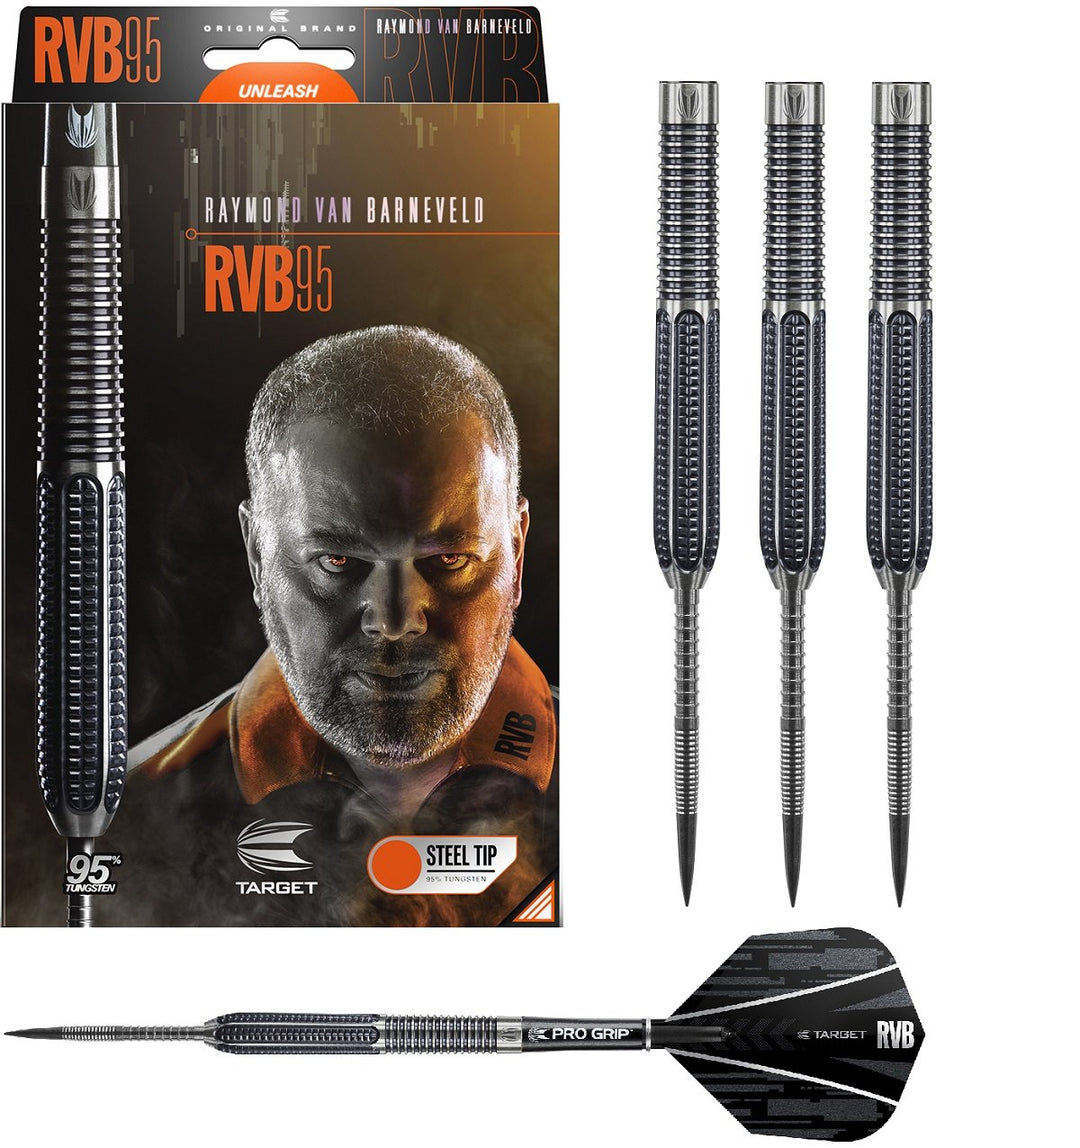 Raymond van Barneveld RVB95 Tungsten Steel Tip Darts by Target